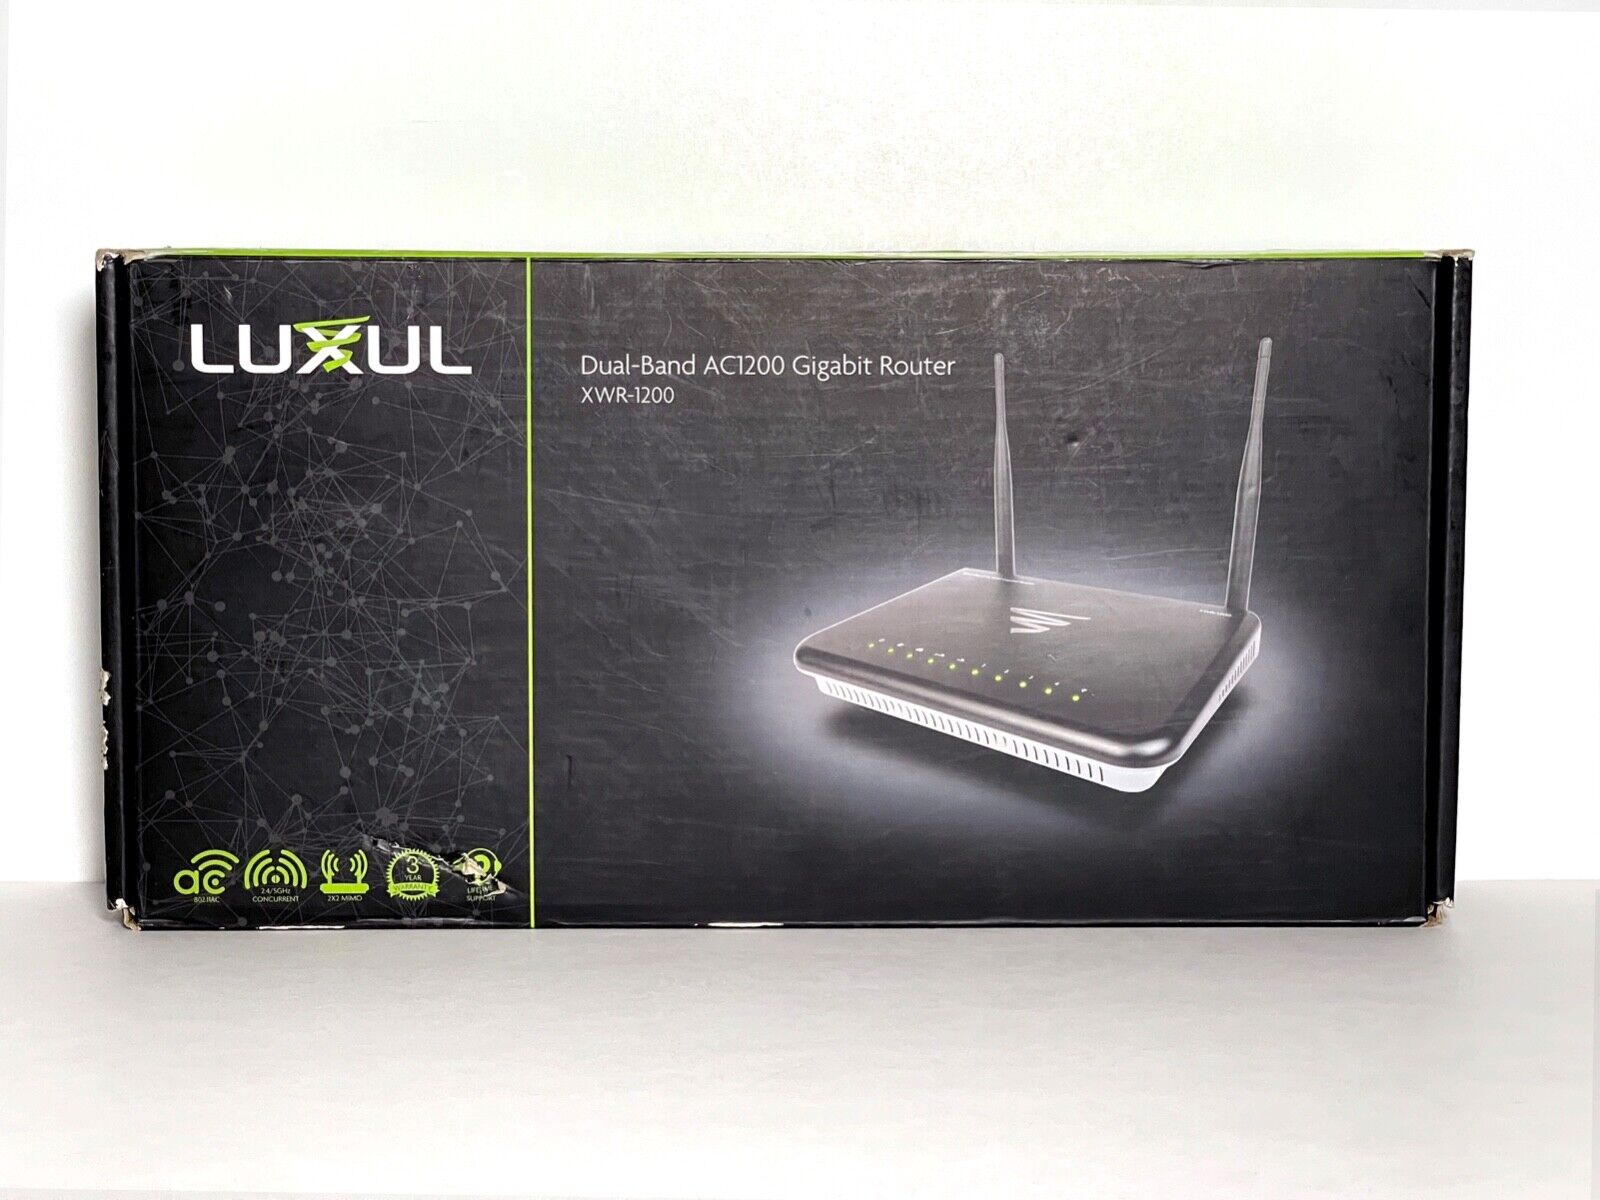 Luxul XWR-1200 Dual-Band AC1200 Gigabit Router